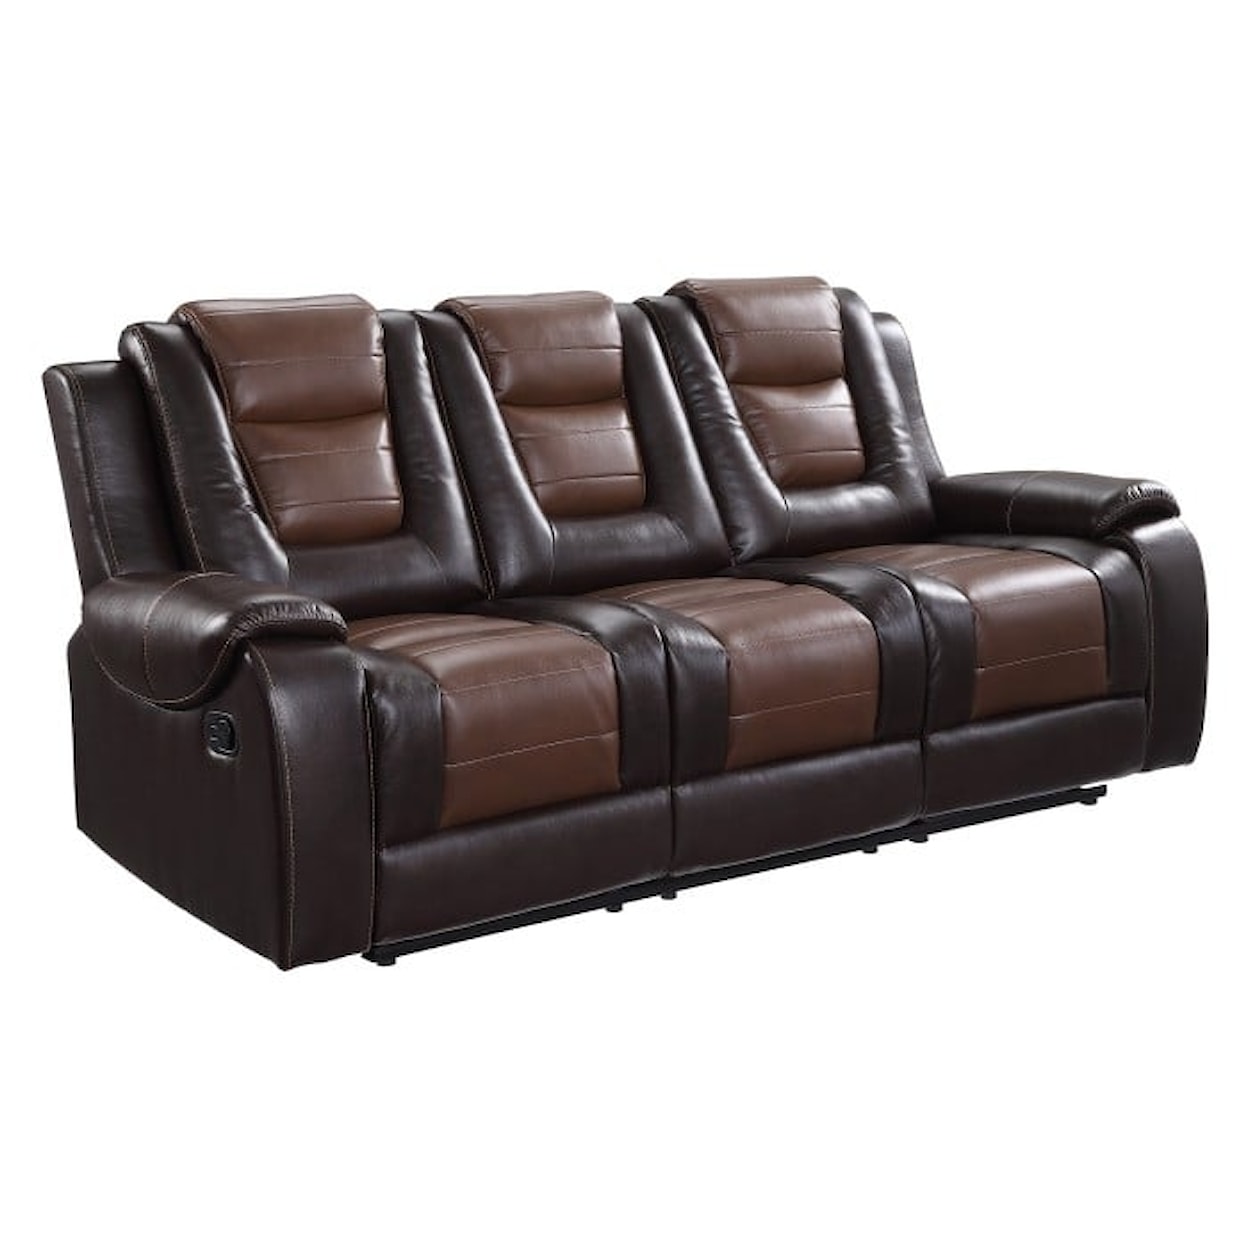 Homelegance Furniture Briscoe Double Reclining Sofa